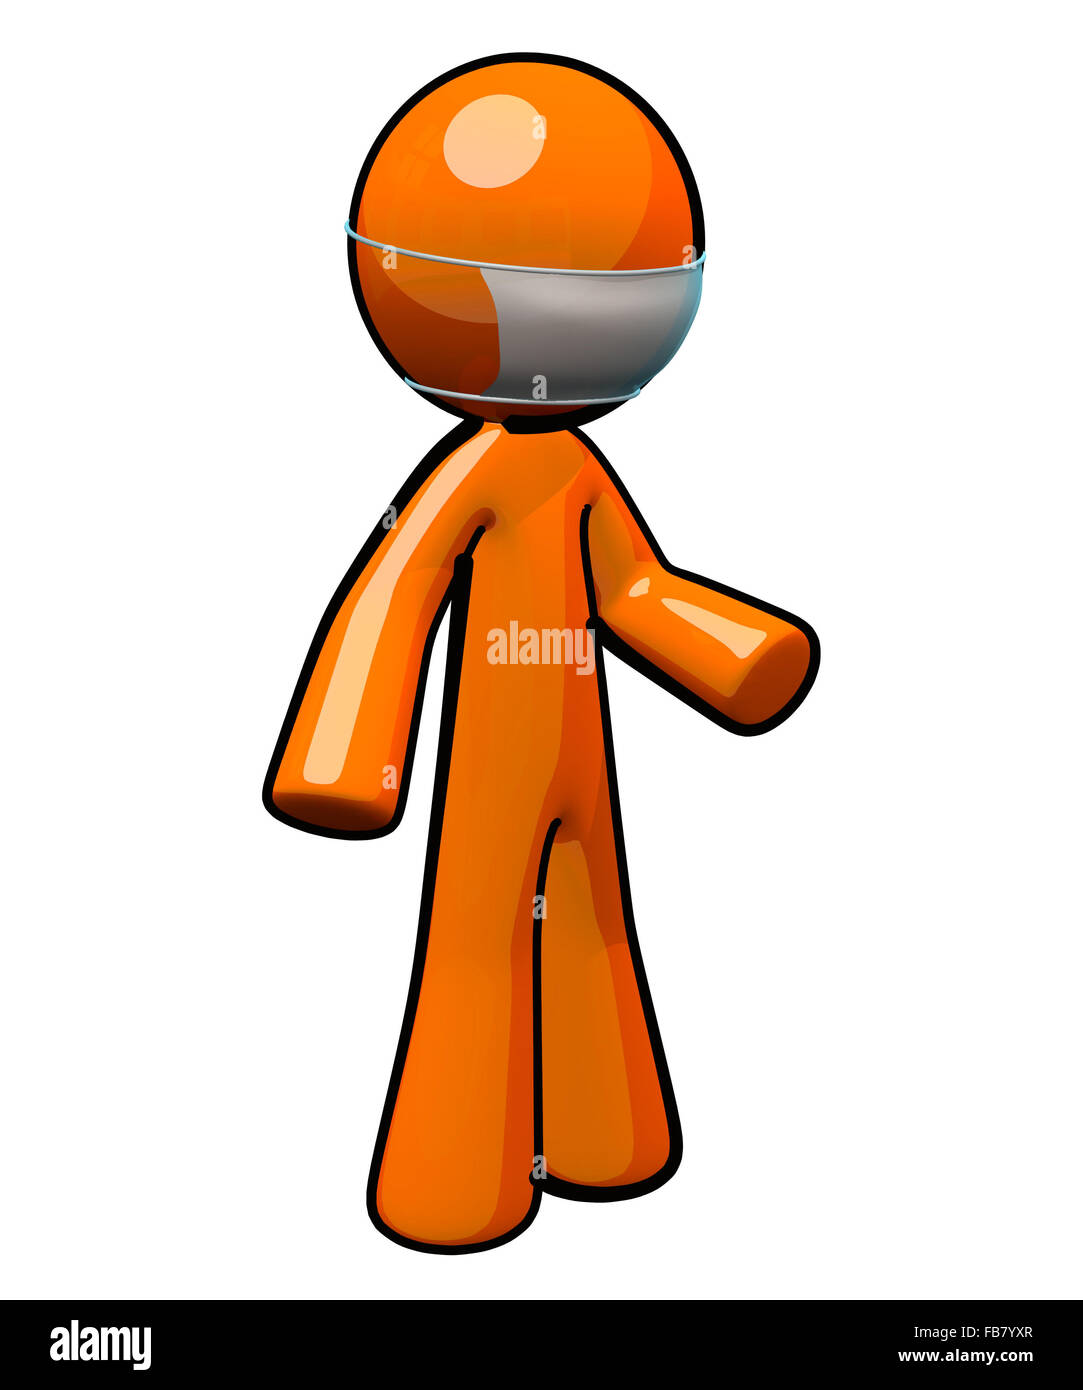 3d orange man wearing protective face mask, perhaps shieldign a patient. Stock Photo